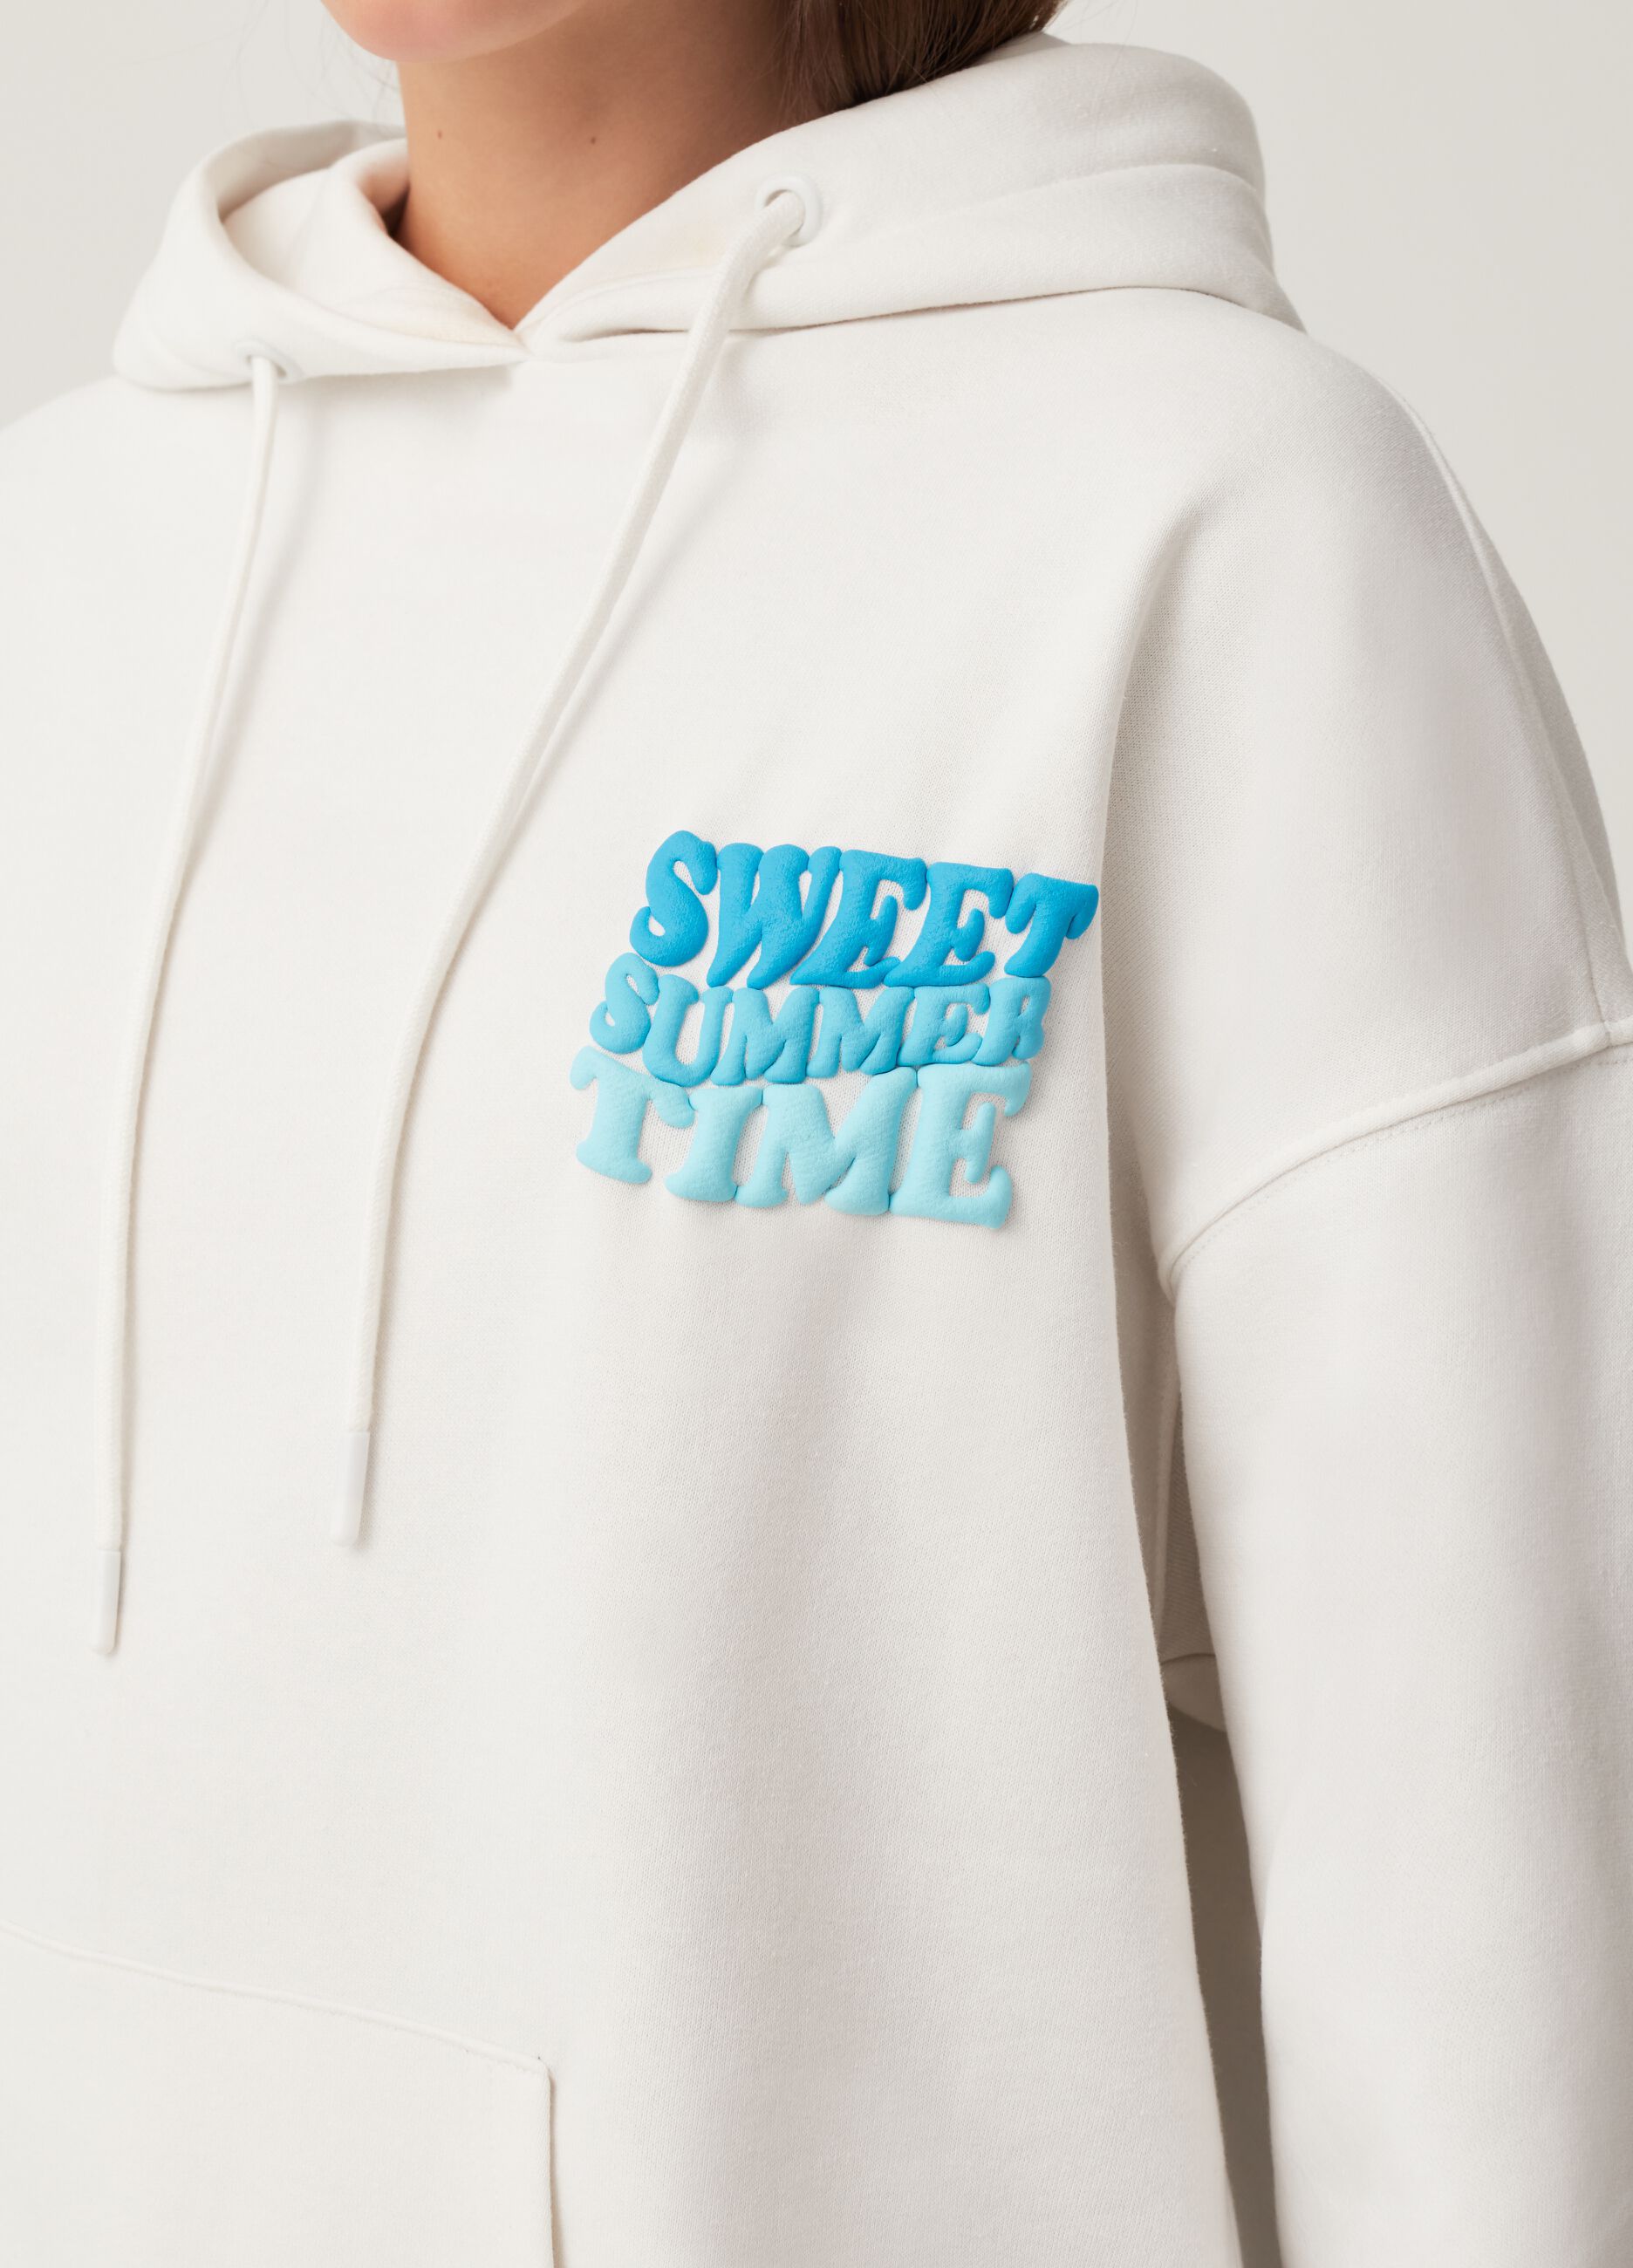 Sweatshirt with raised lettering